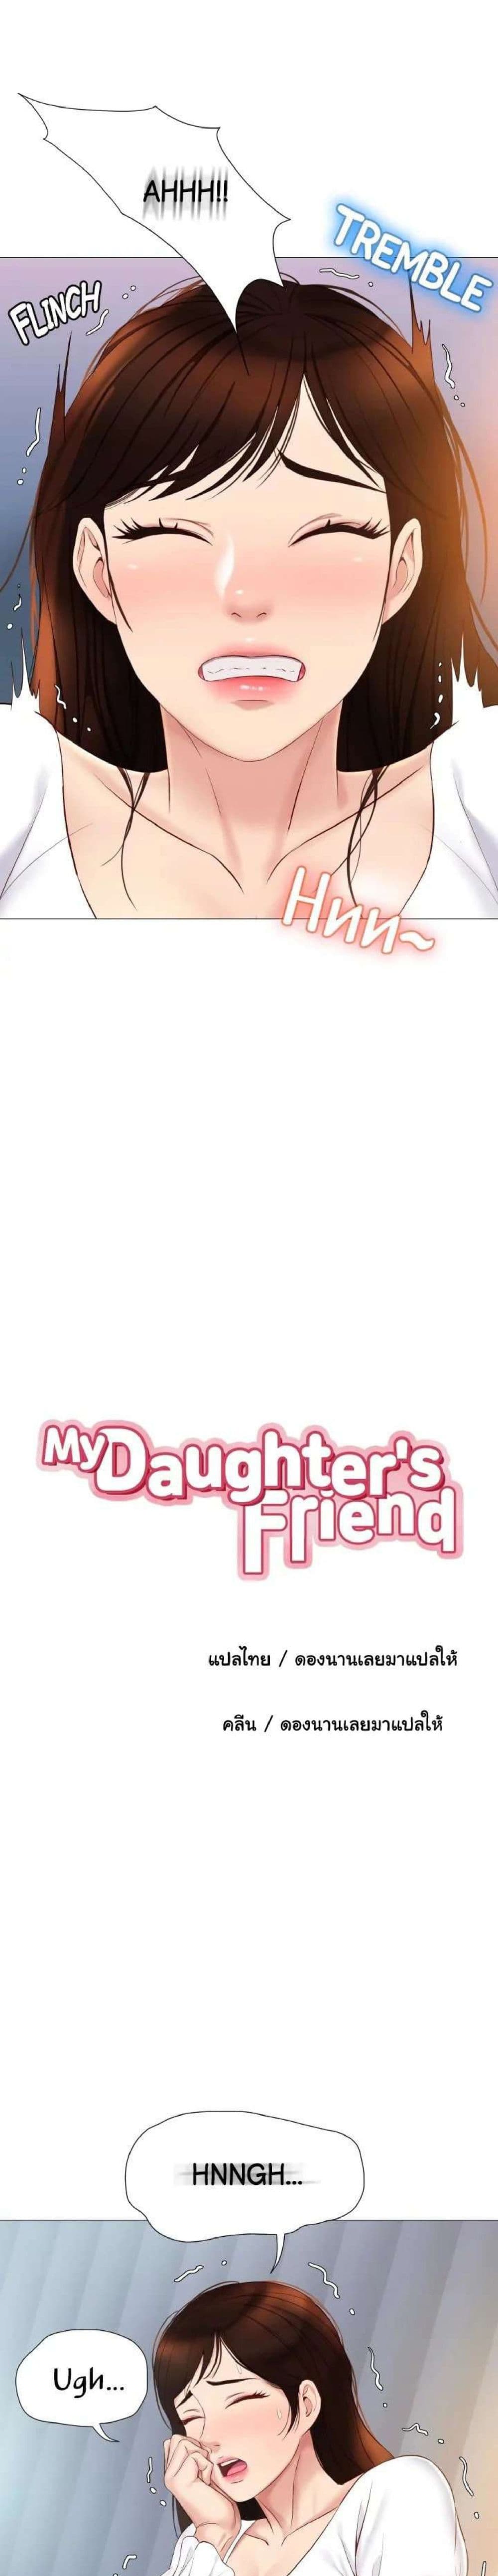 Daughter-Friend-33_06.jpg